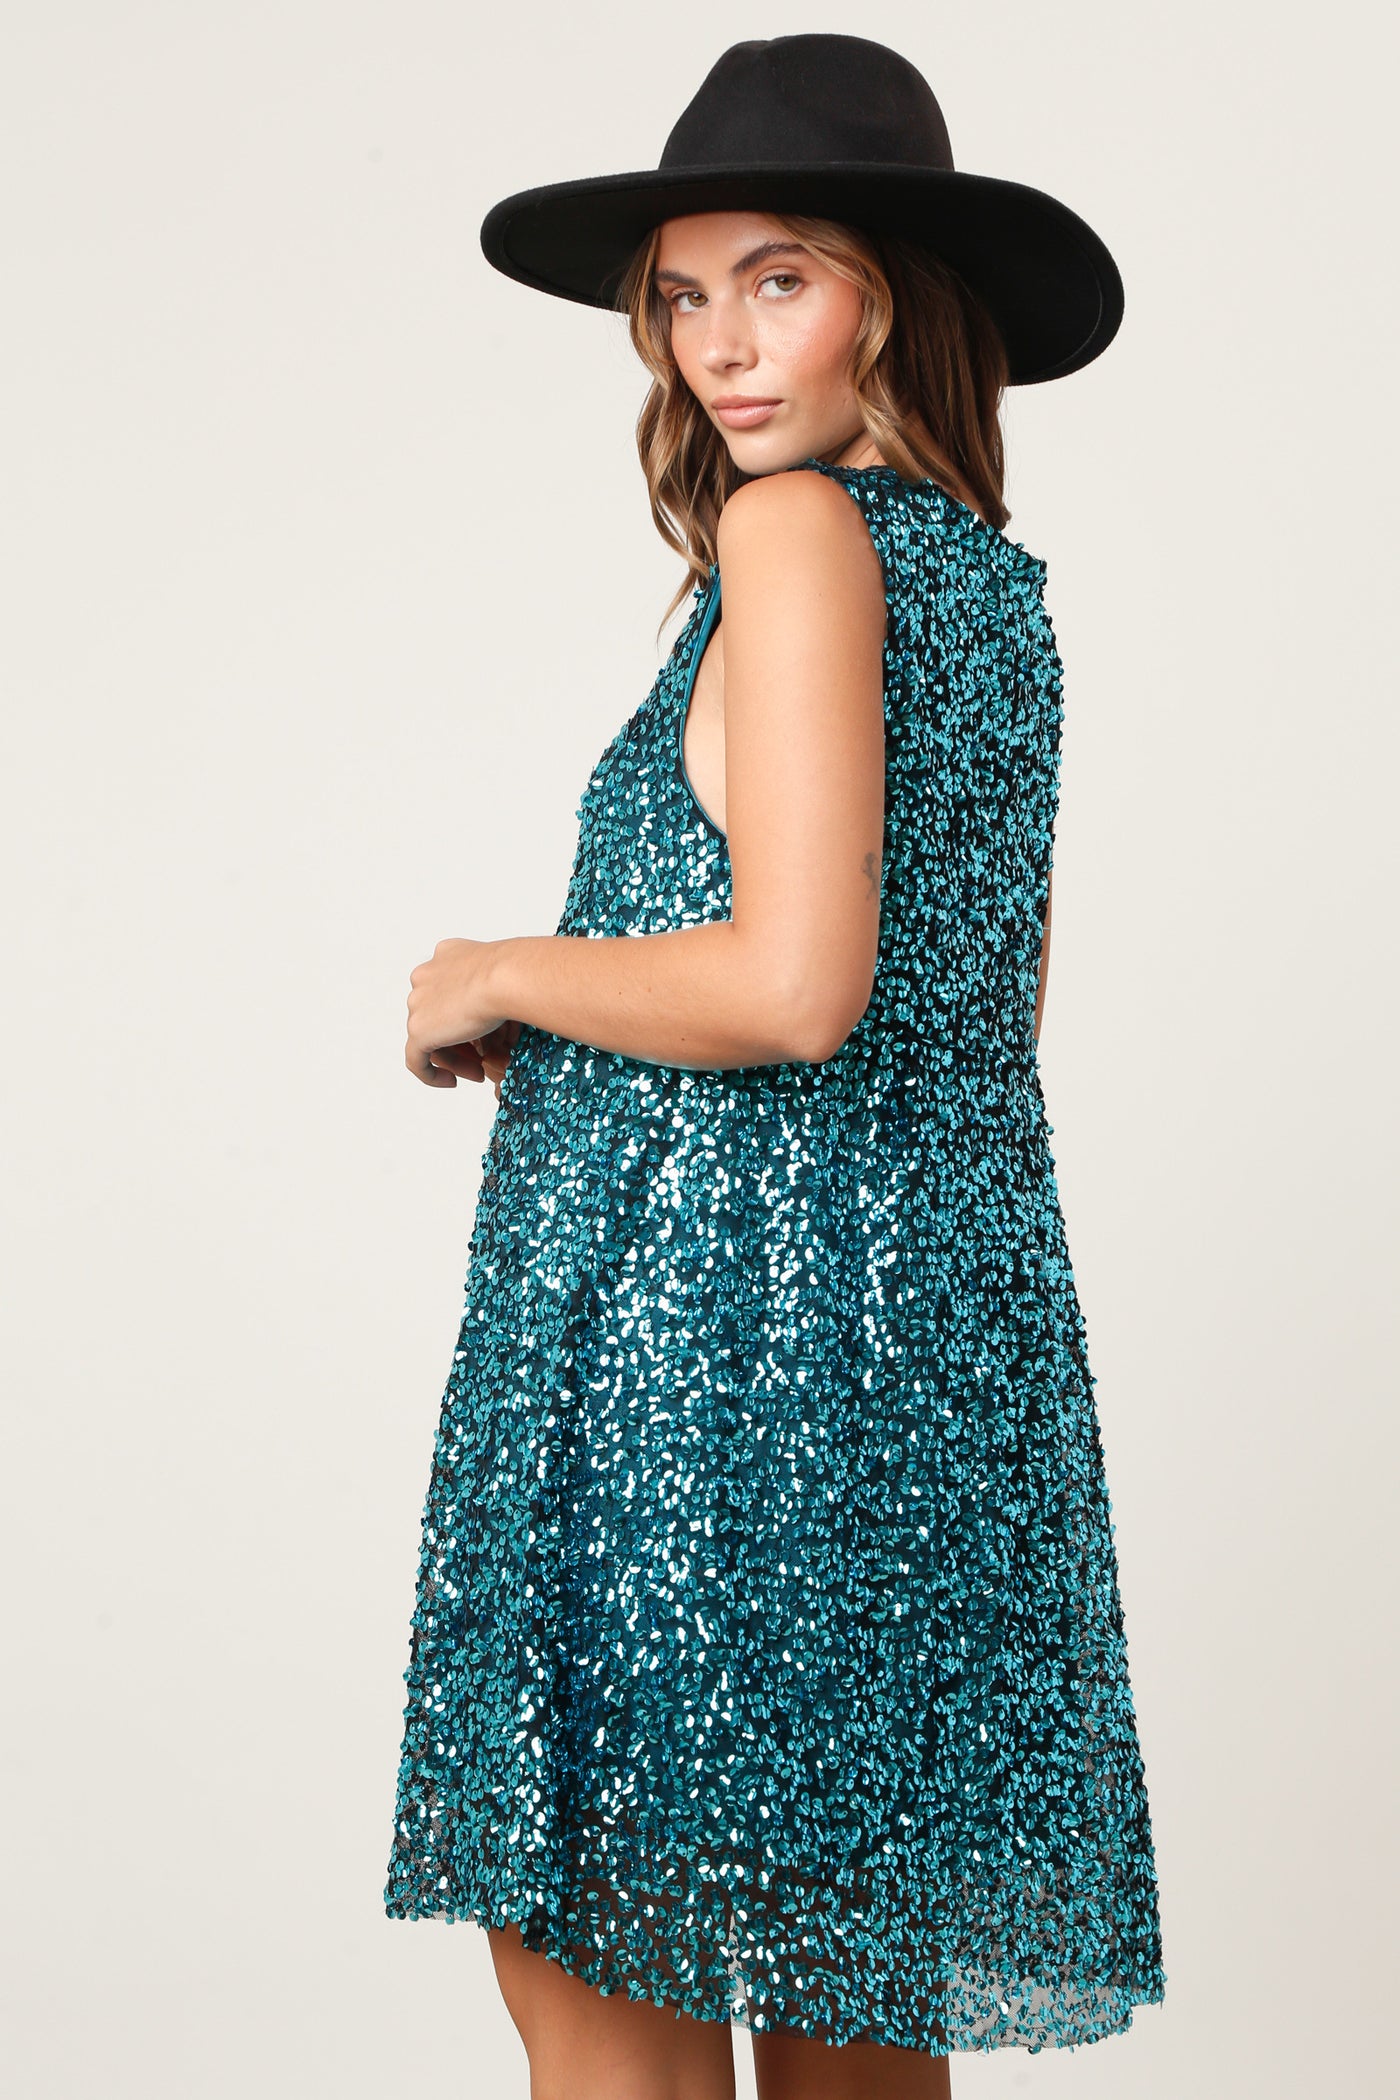 Eavey Turquoise Sequin Mini Dress